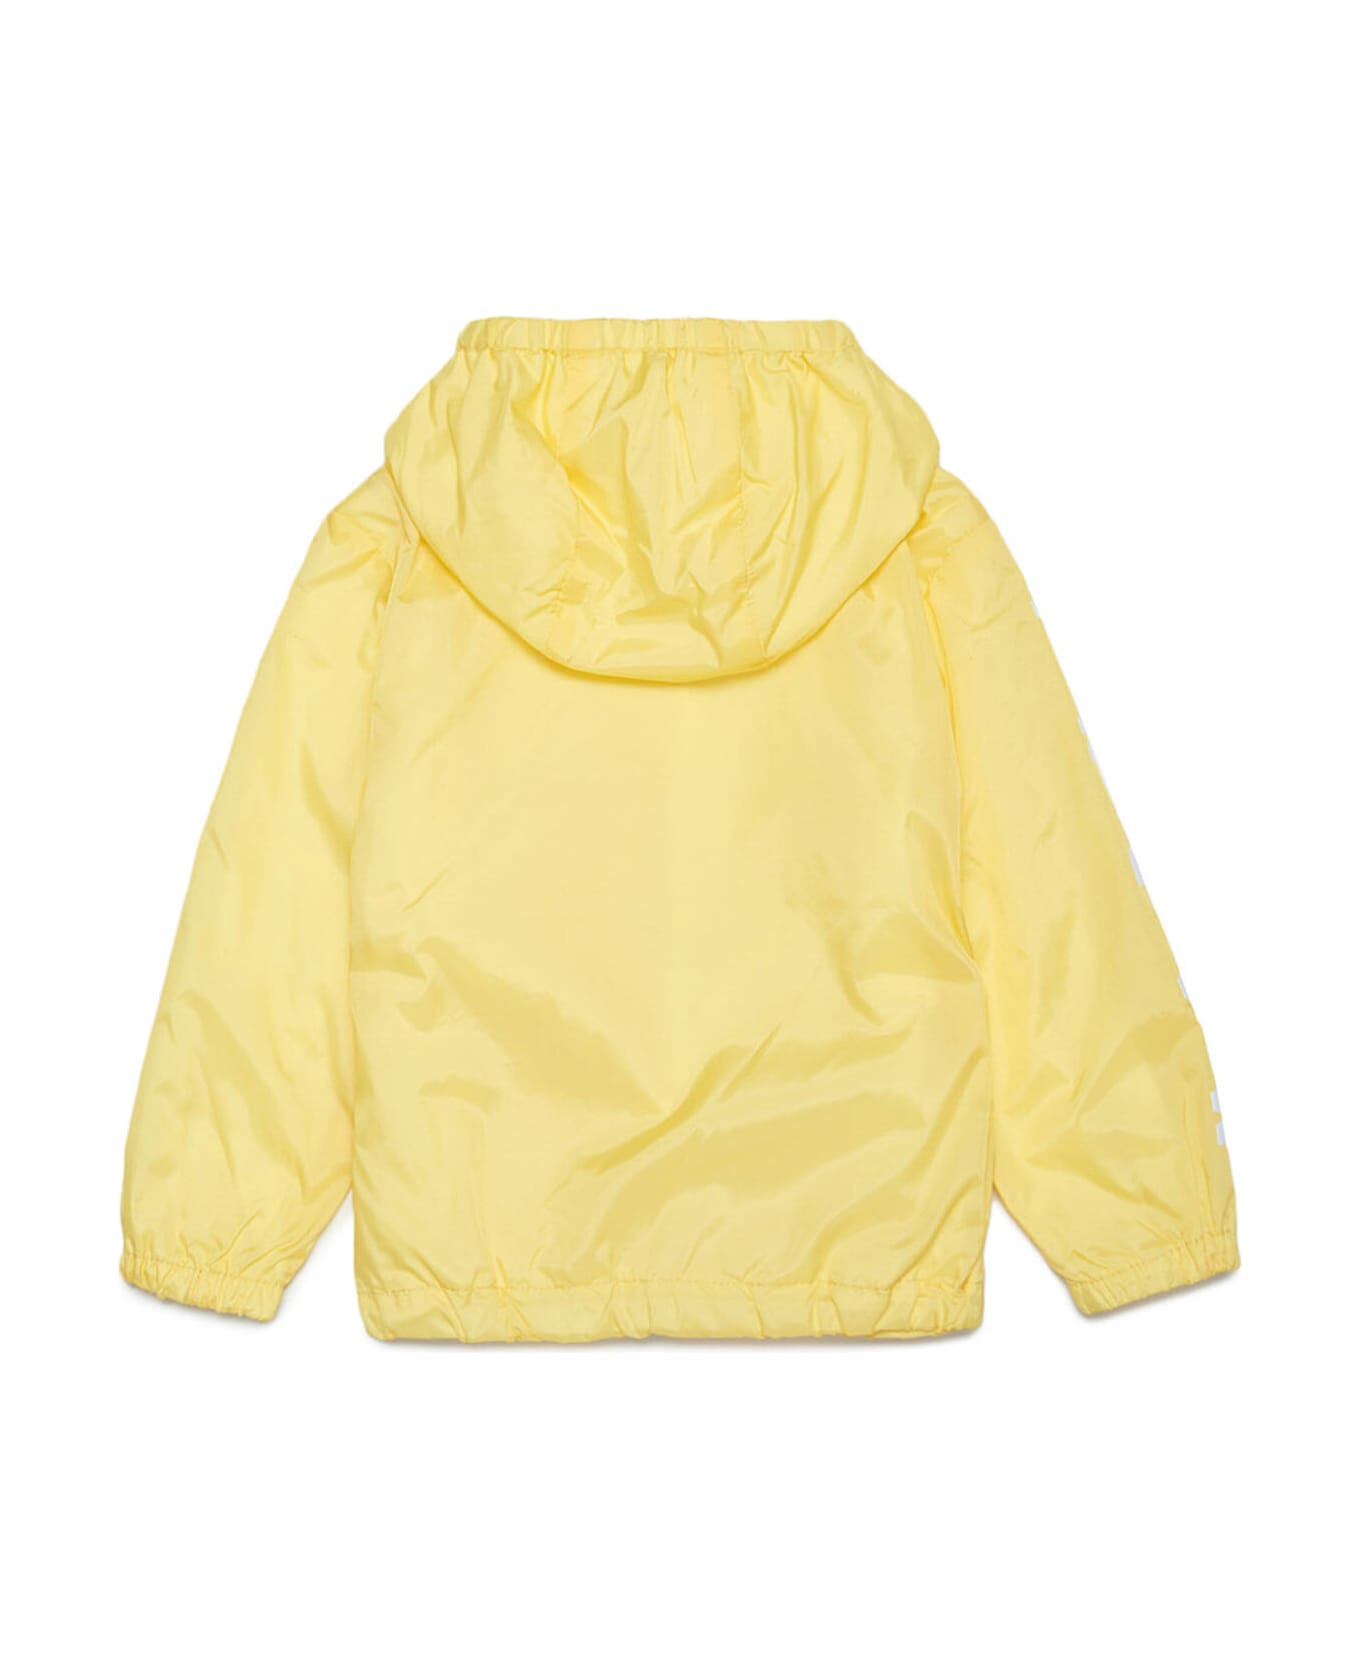 Marni Mj31b Jacket Marni Yellow Waterproof Lined Jacket With Hood, Zip And Logo On The Sleeves - Marni bow-fastening blouse